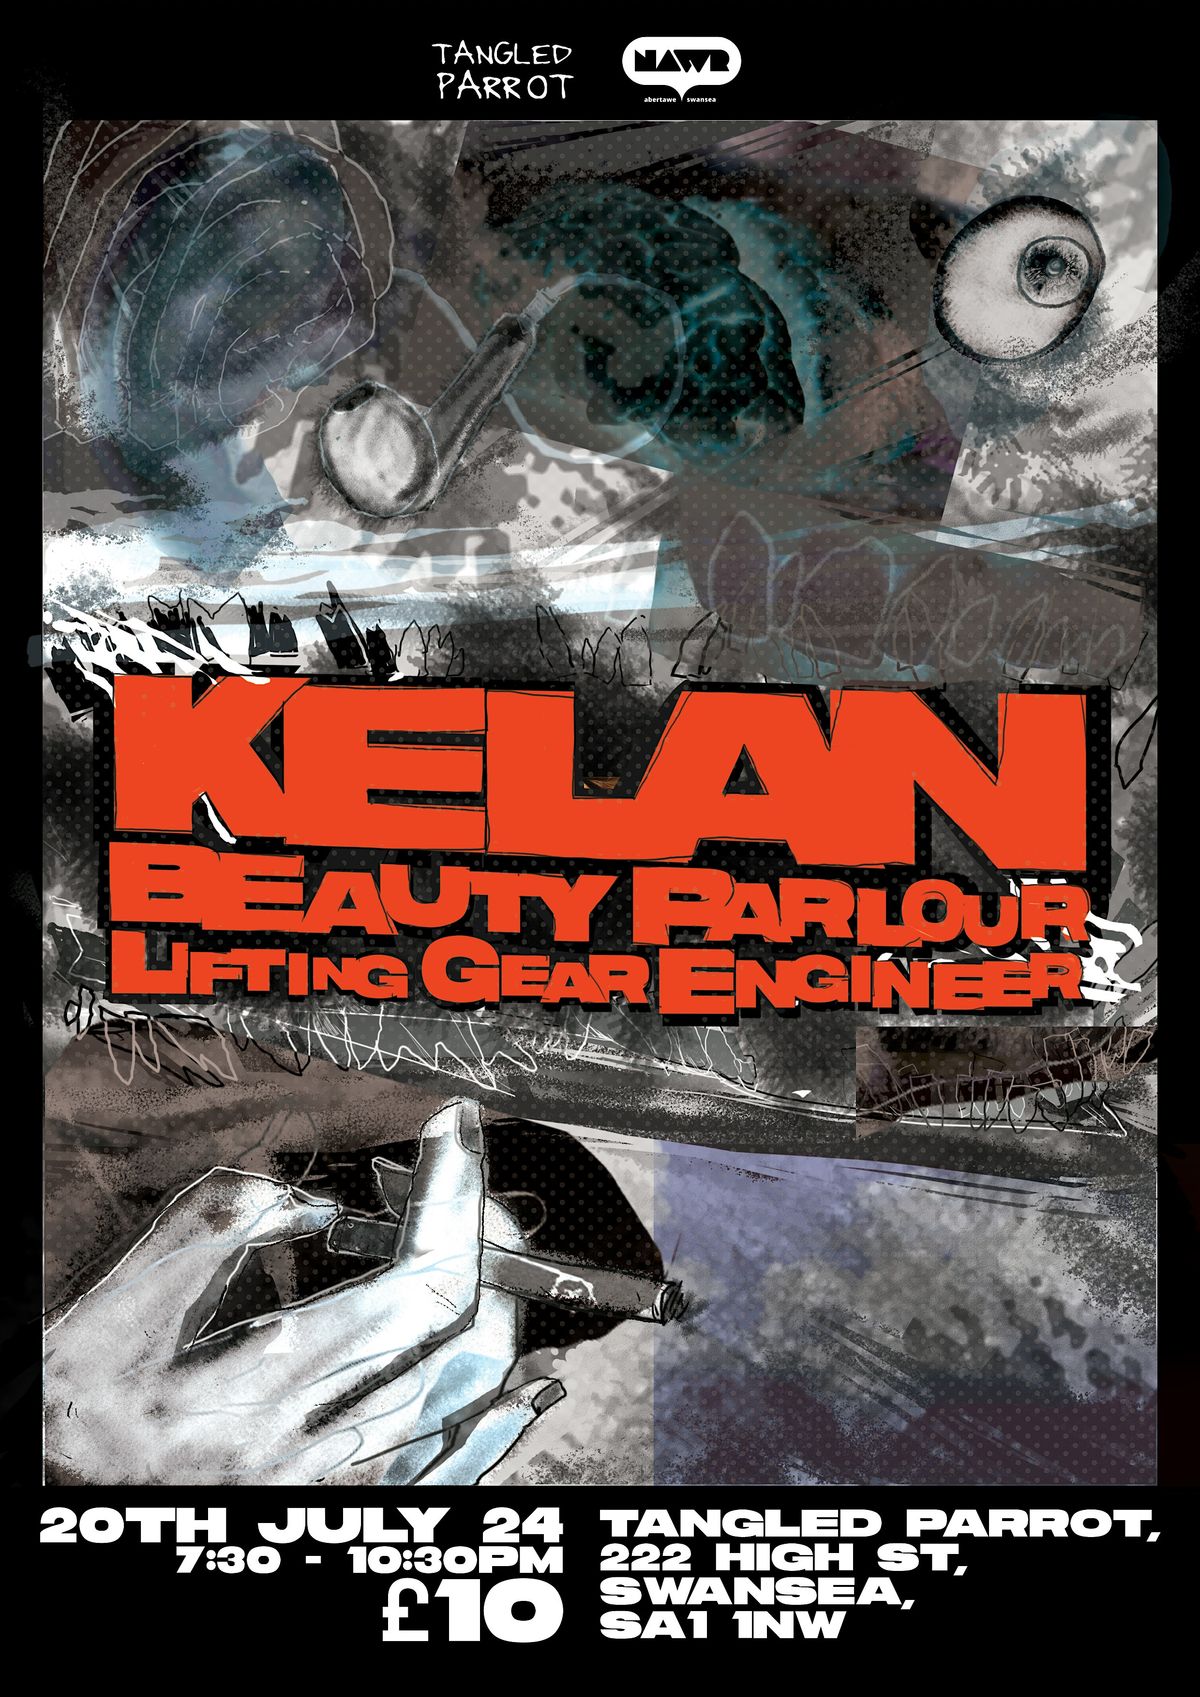 NAWR #61 - KELAN - BEAUTY PARLOUR - LIFTING GEAR ENGINEER